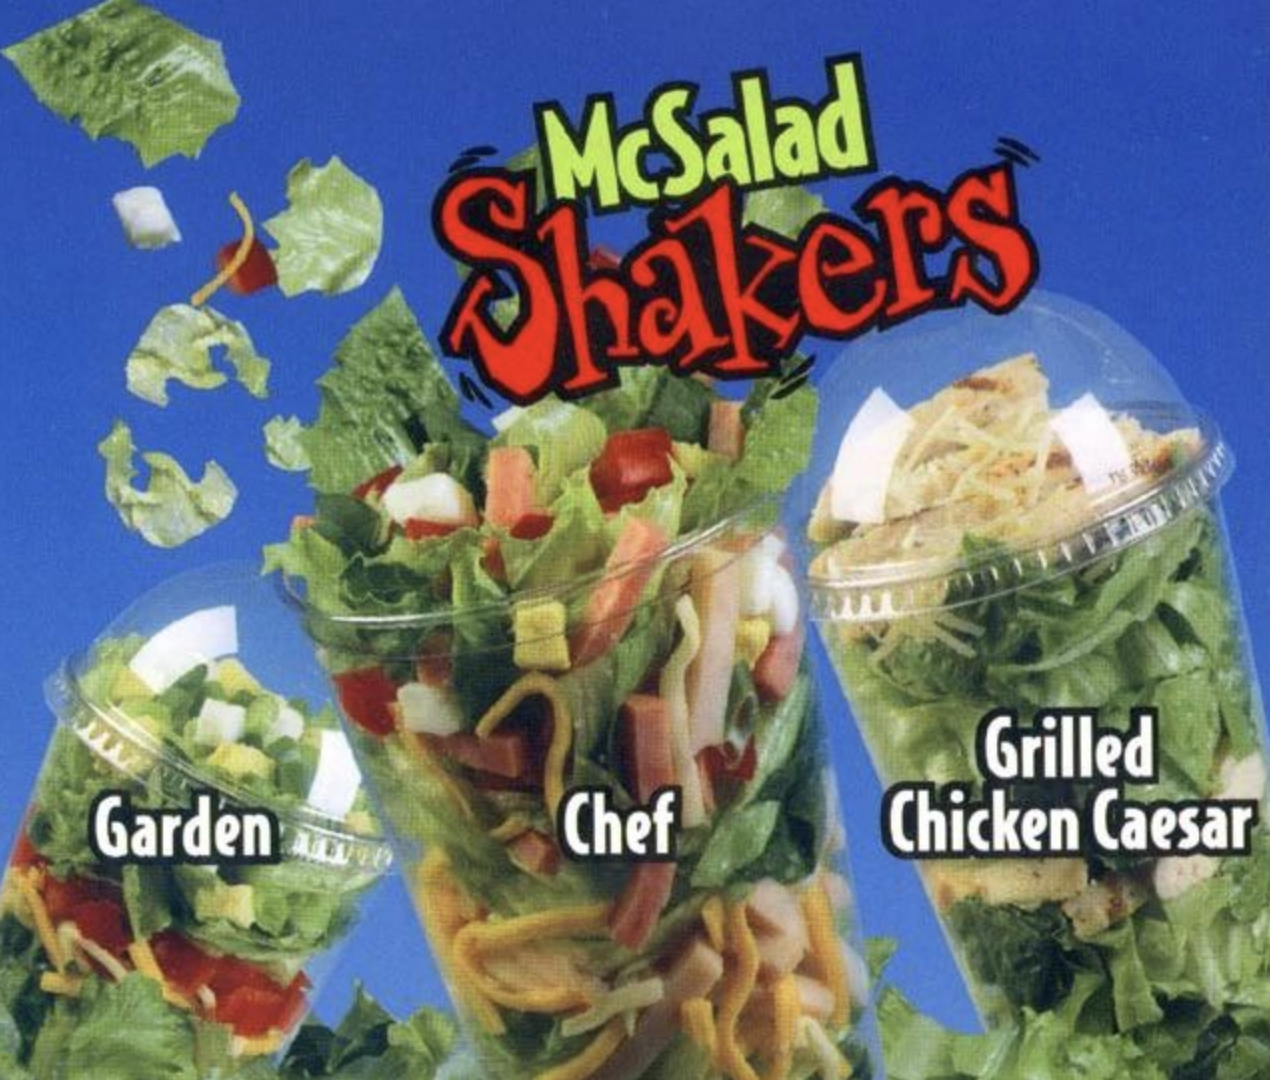 Cups of garden, chef, and grilled chicken Caesar salads